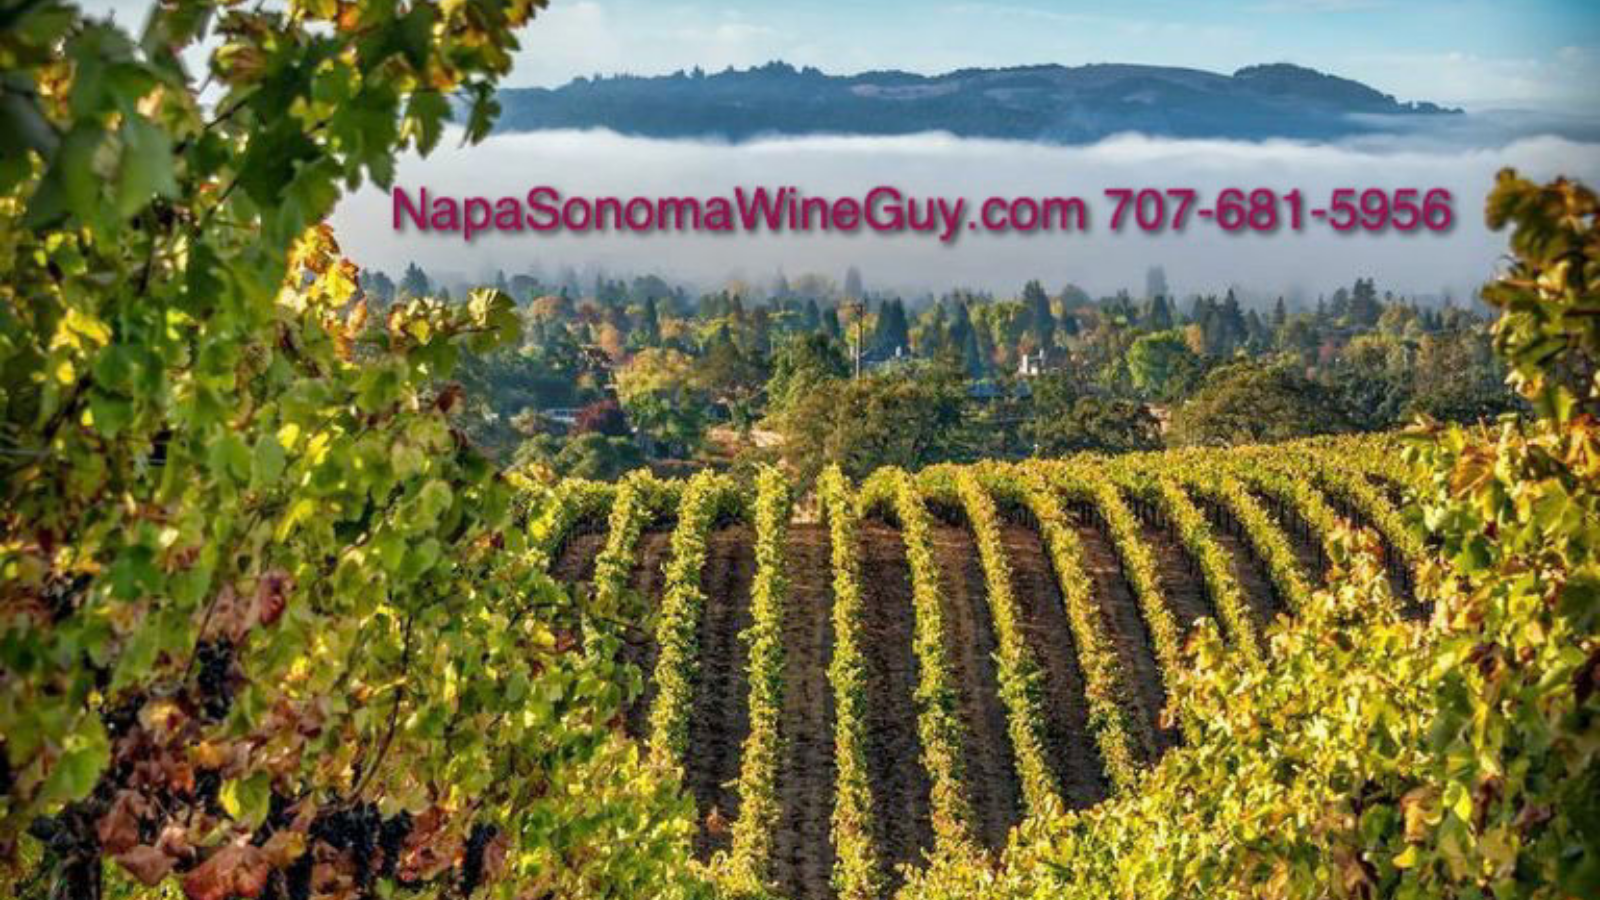 Napa Sonoma Wine Guy